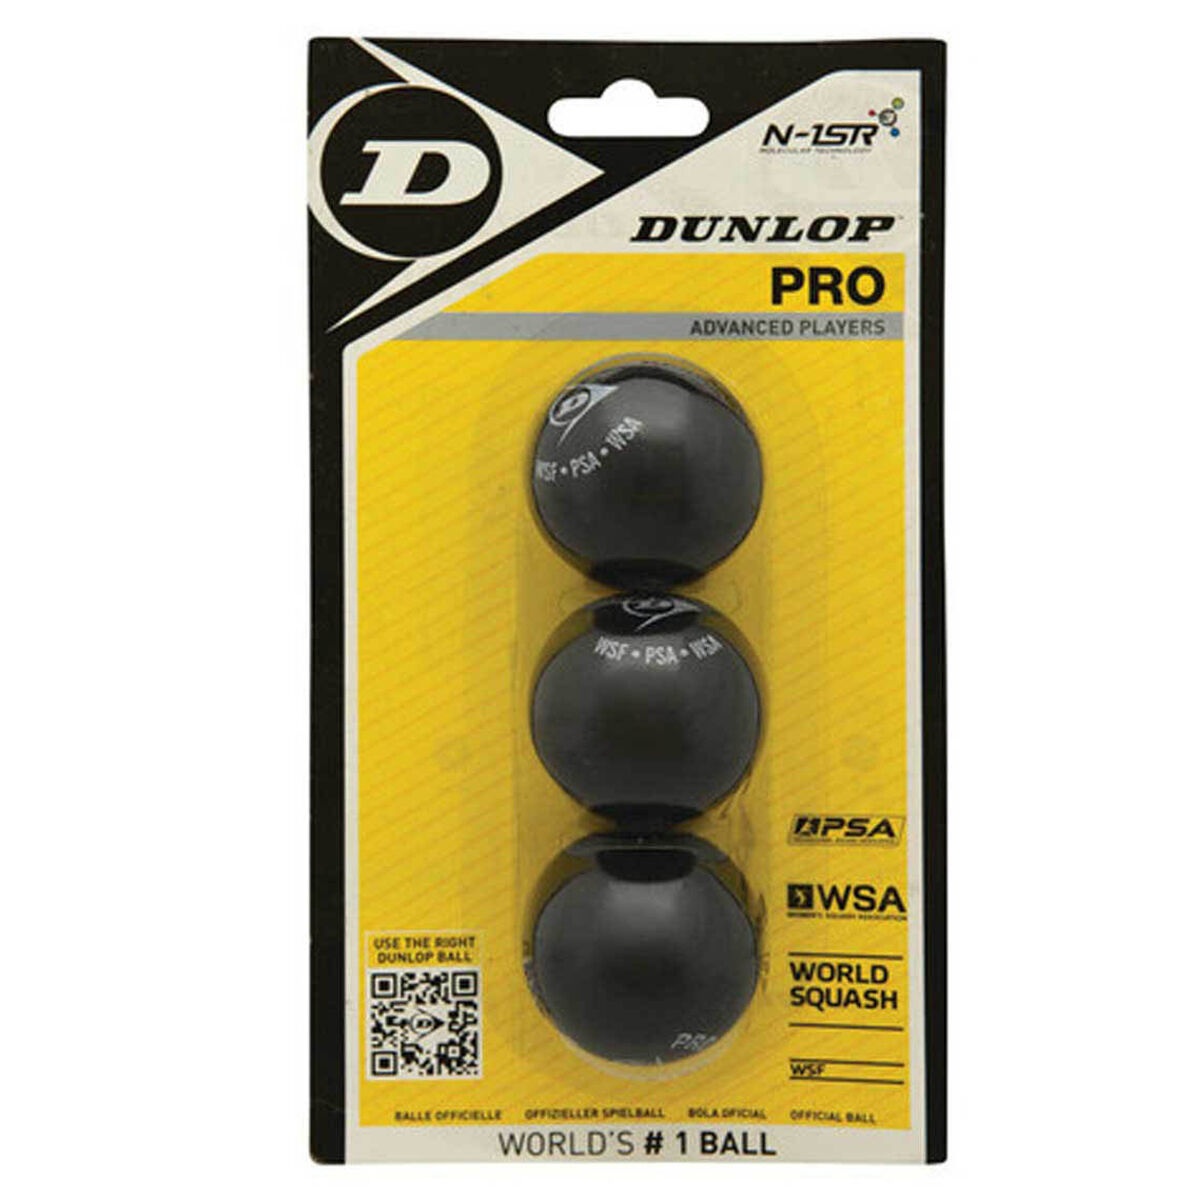 DUNLOP Compete Mini Squash Balls Pack of 3 